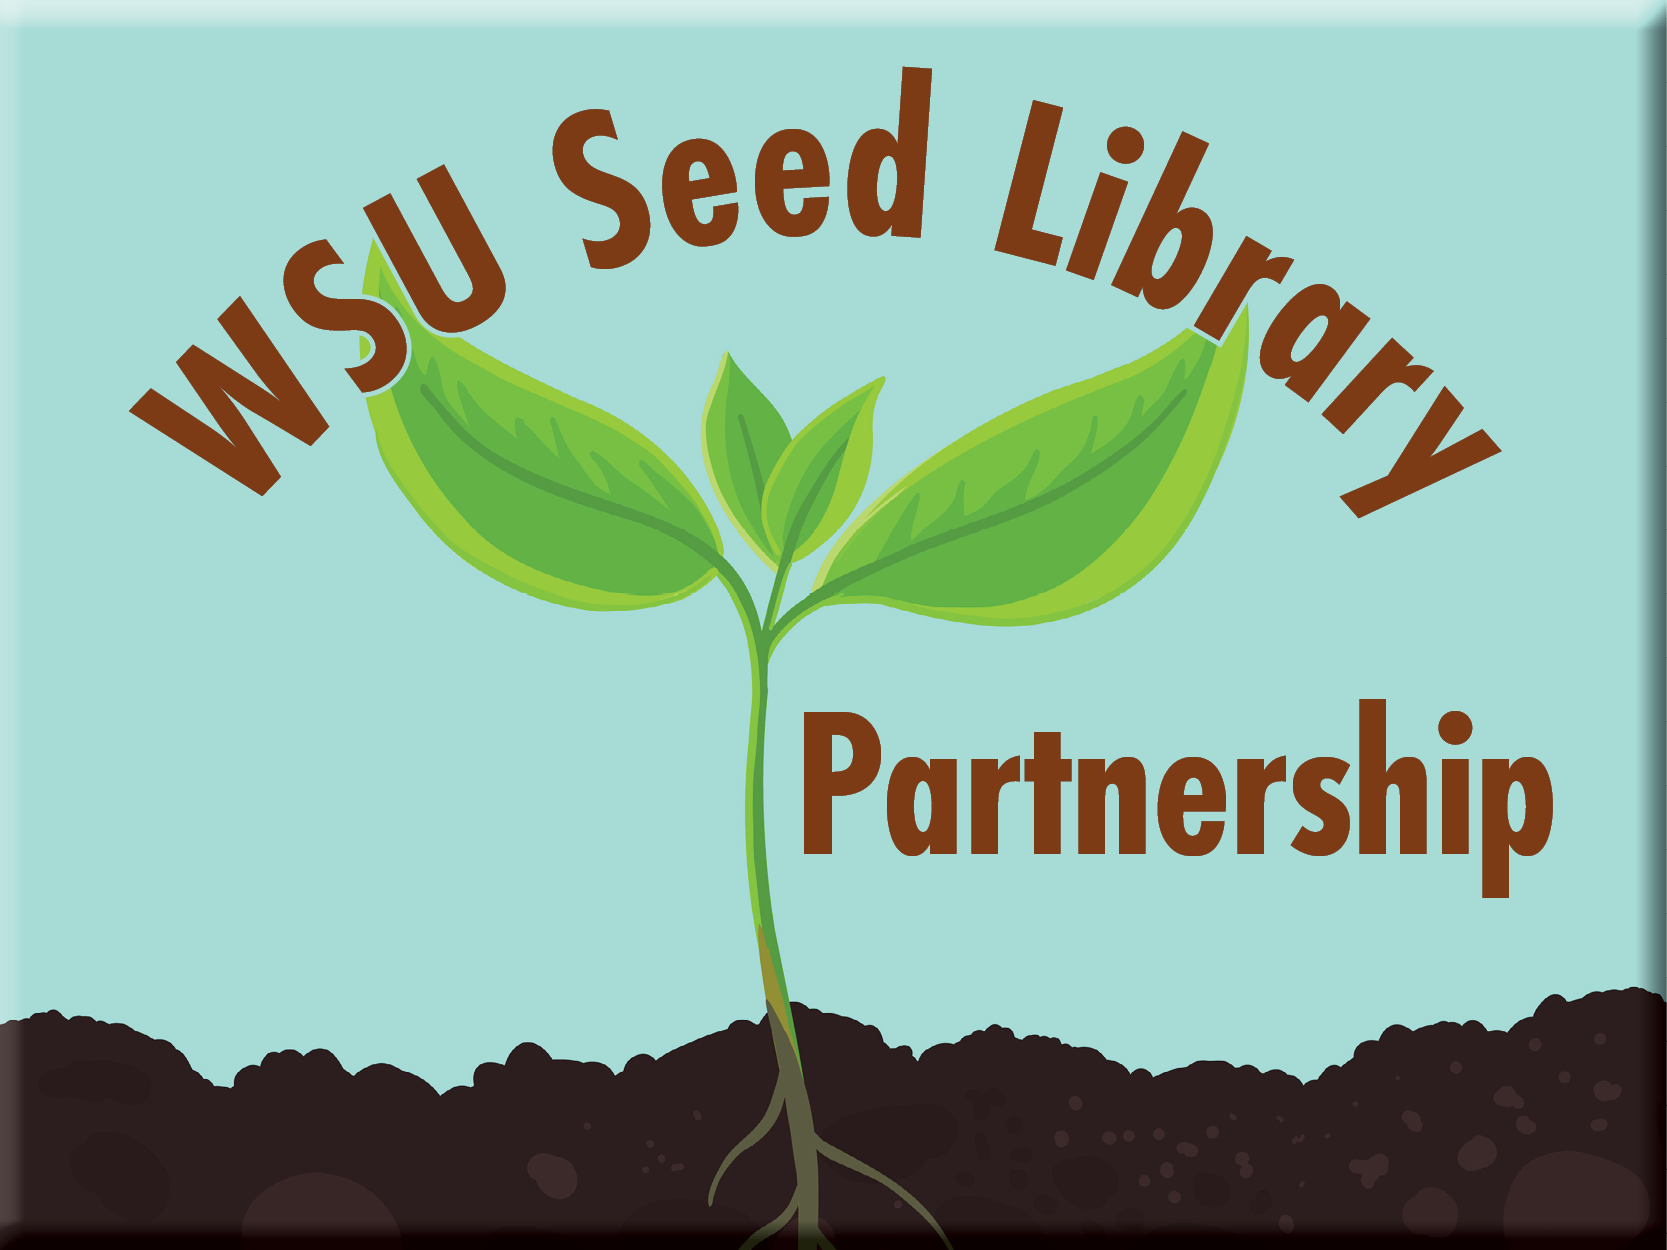 WSU Seed Library Partnership